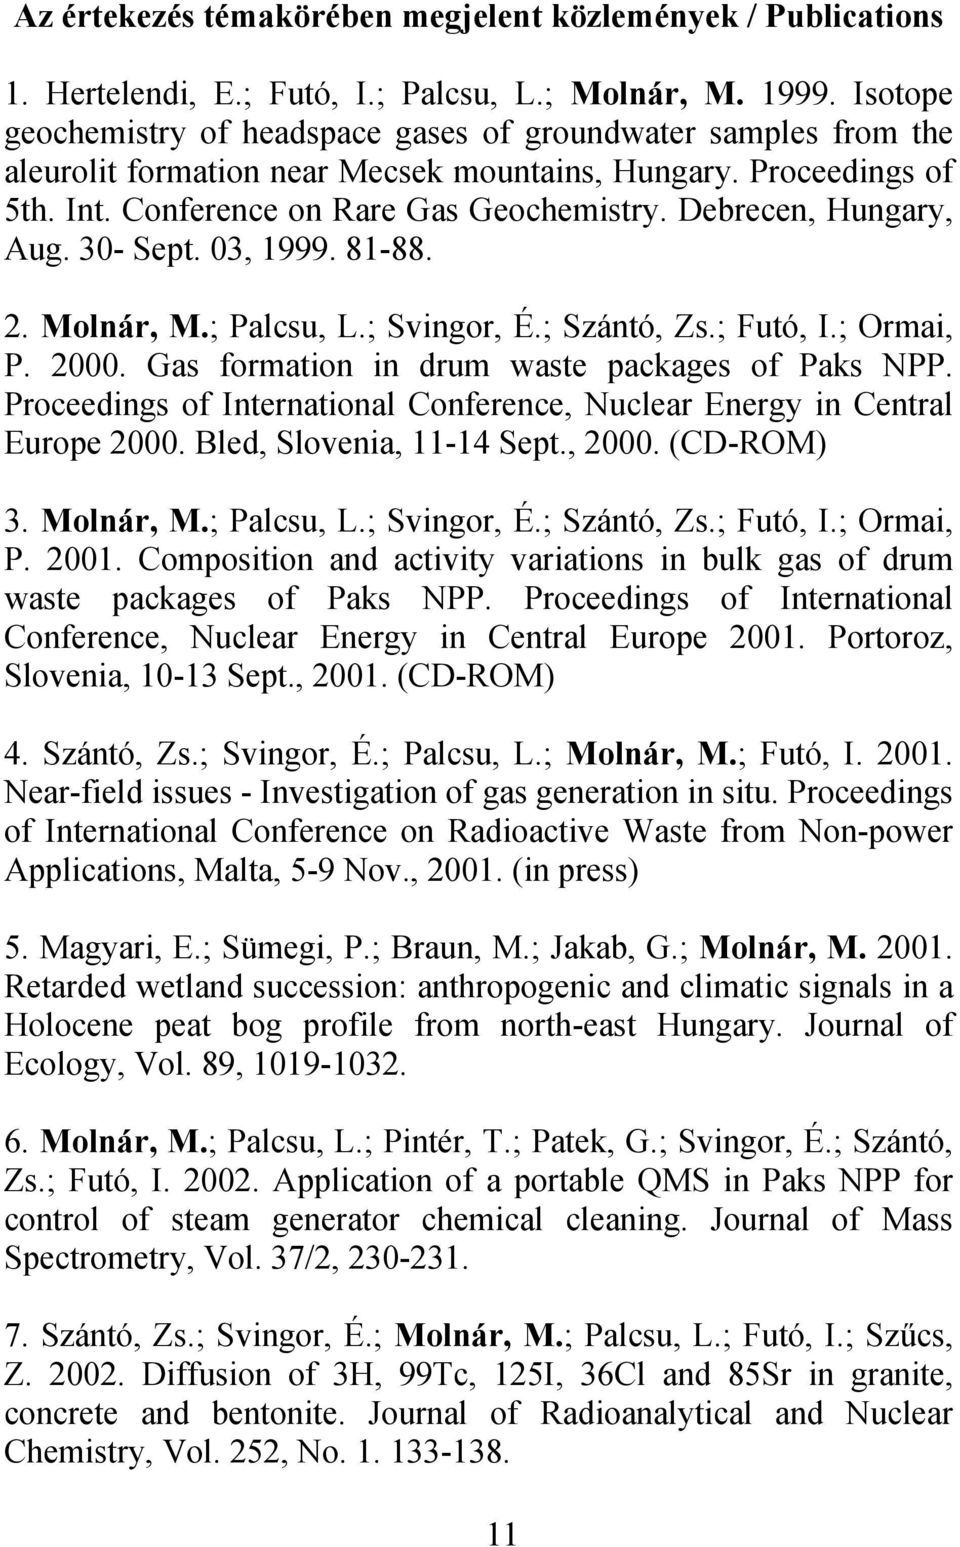 Debrecen, Hungary, Aug. 30- Sept. 03, 1999. 81-88. 2. Molnár, M.; Palcsu, L.; Svingor, É.; Szántó, Zs.; Futó, I.; Ormai, P. 2000. Gas formation in drum waste packages of Paks NPP.